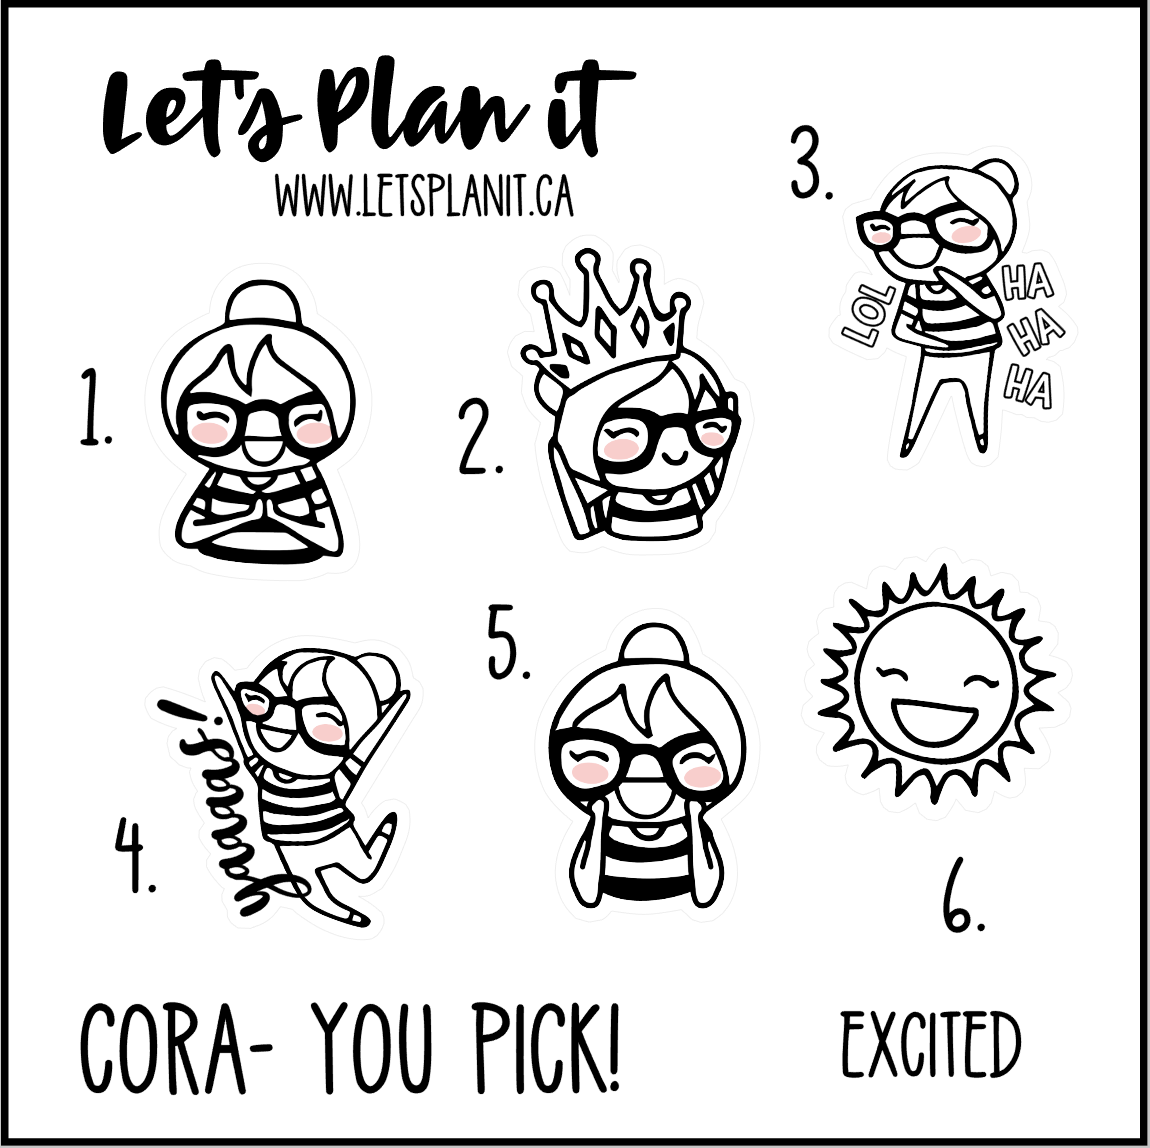 Cora-u-pick- Excited